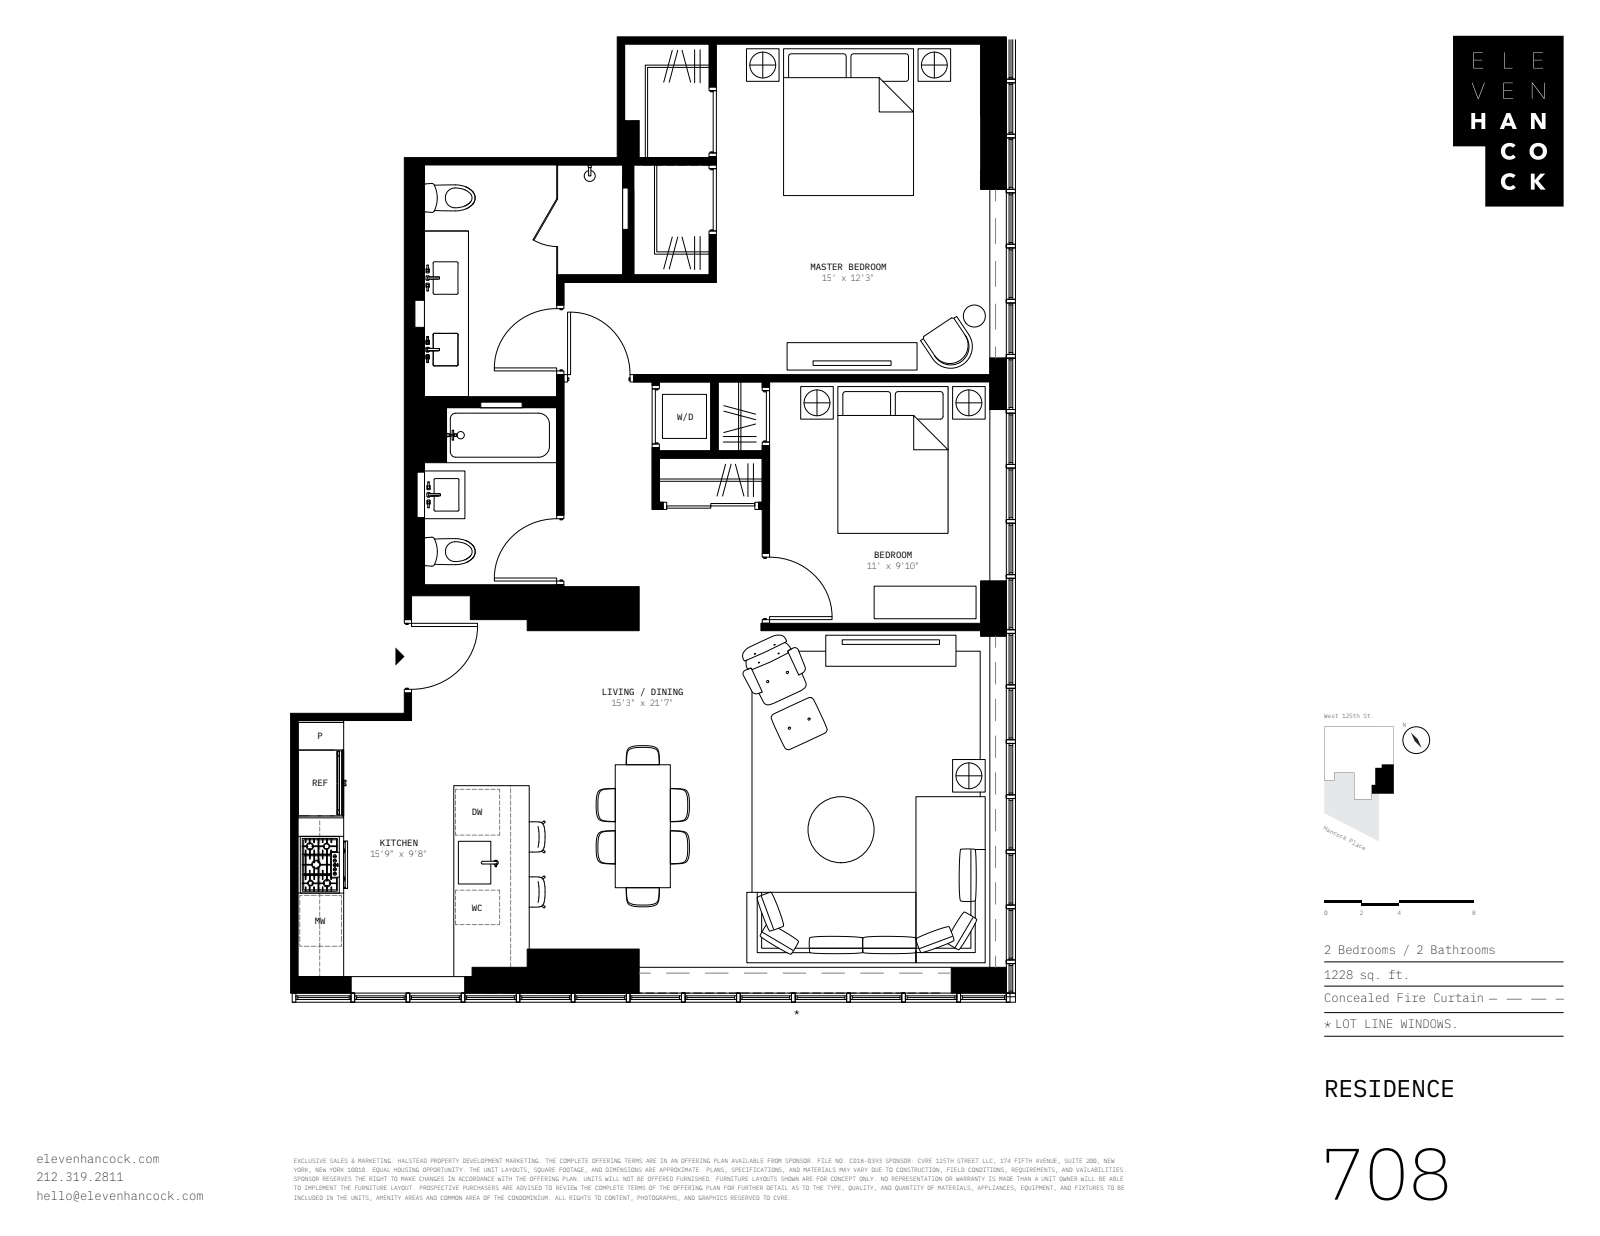 Floorplan for 11 Hancock Place, 708